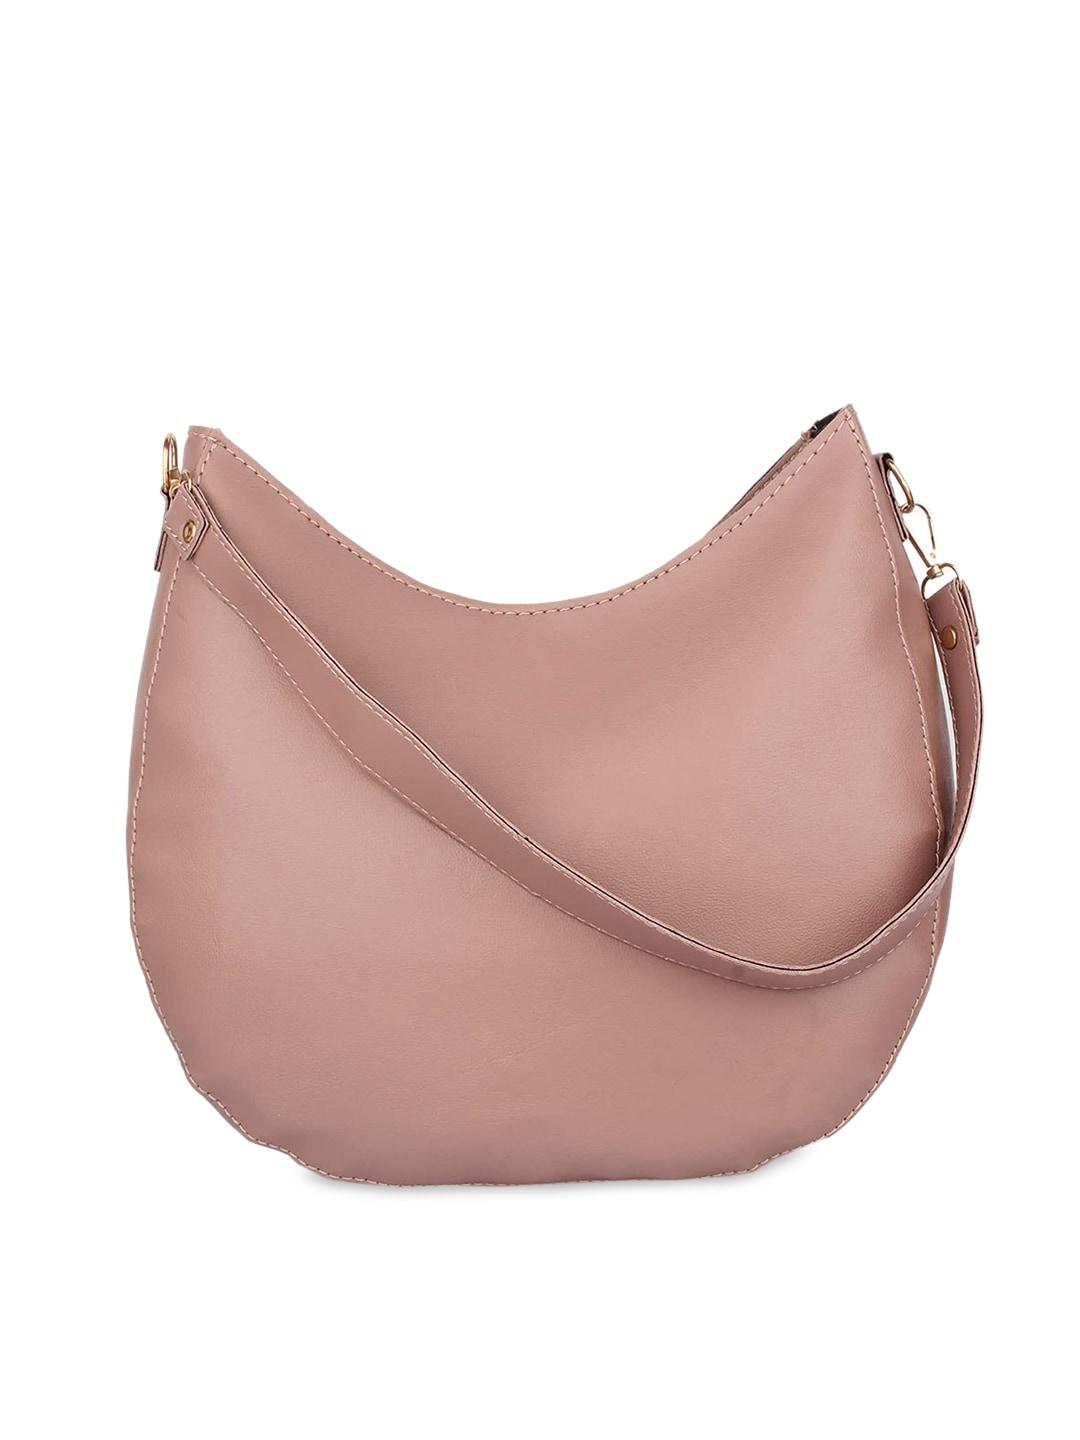 Style SHOES Pink PU Oversized Shopper Hobo Bag